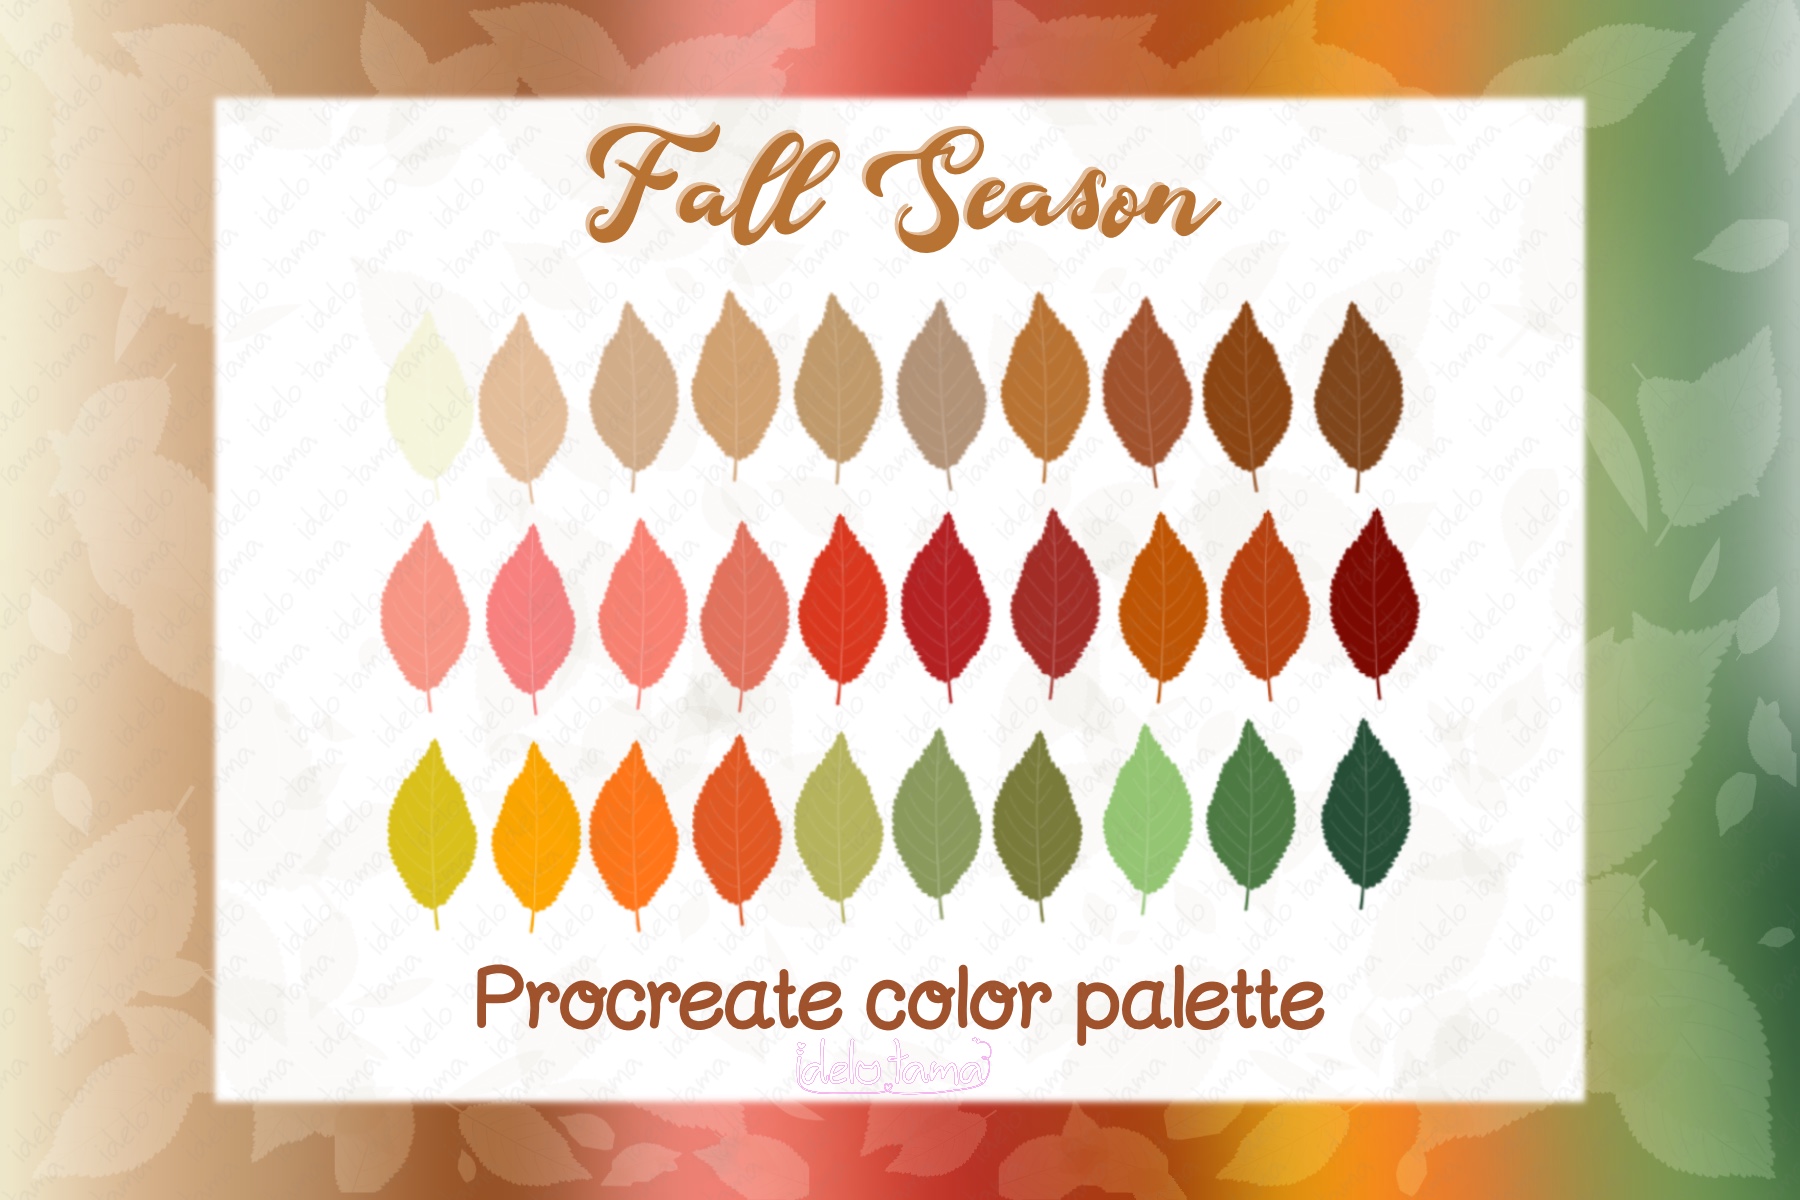 Procreate Color Palette Fall Season